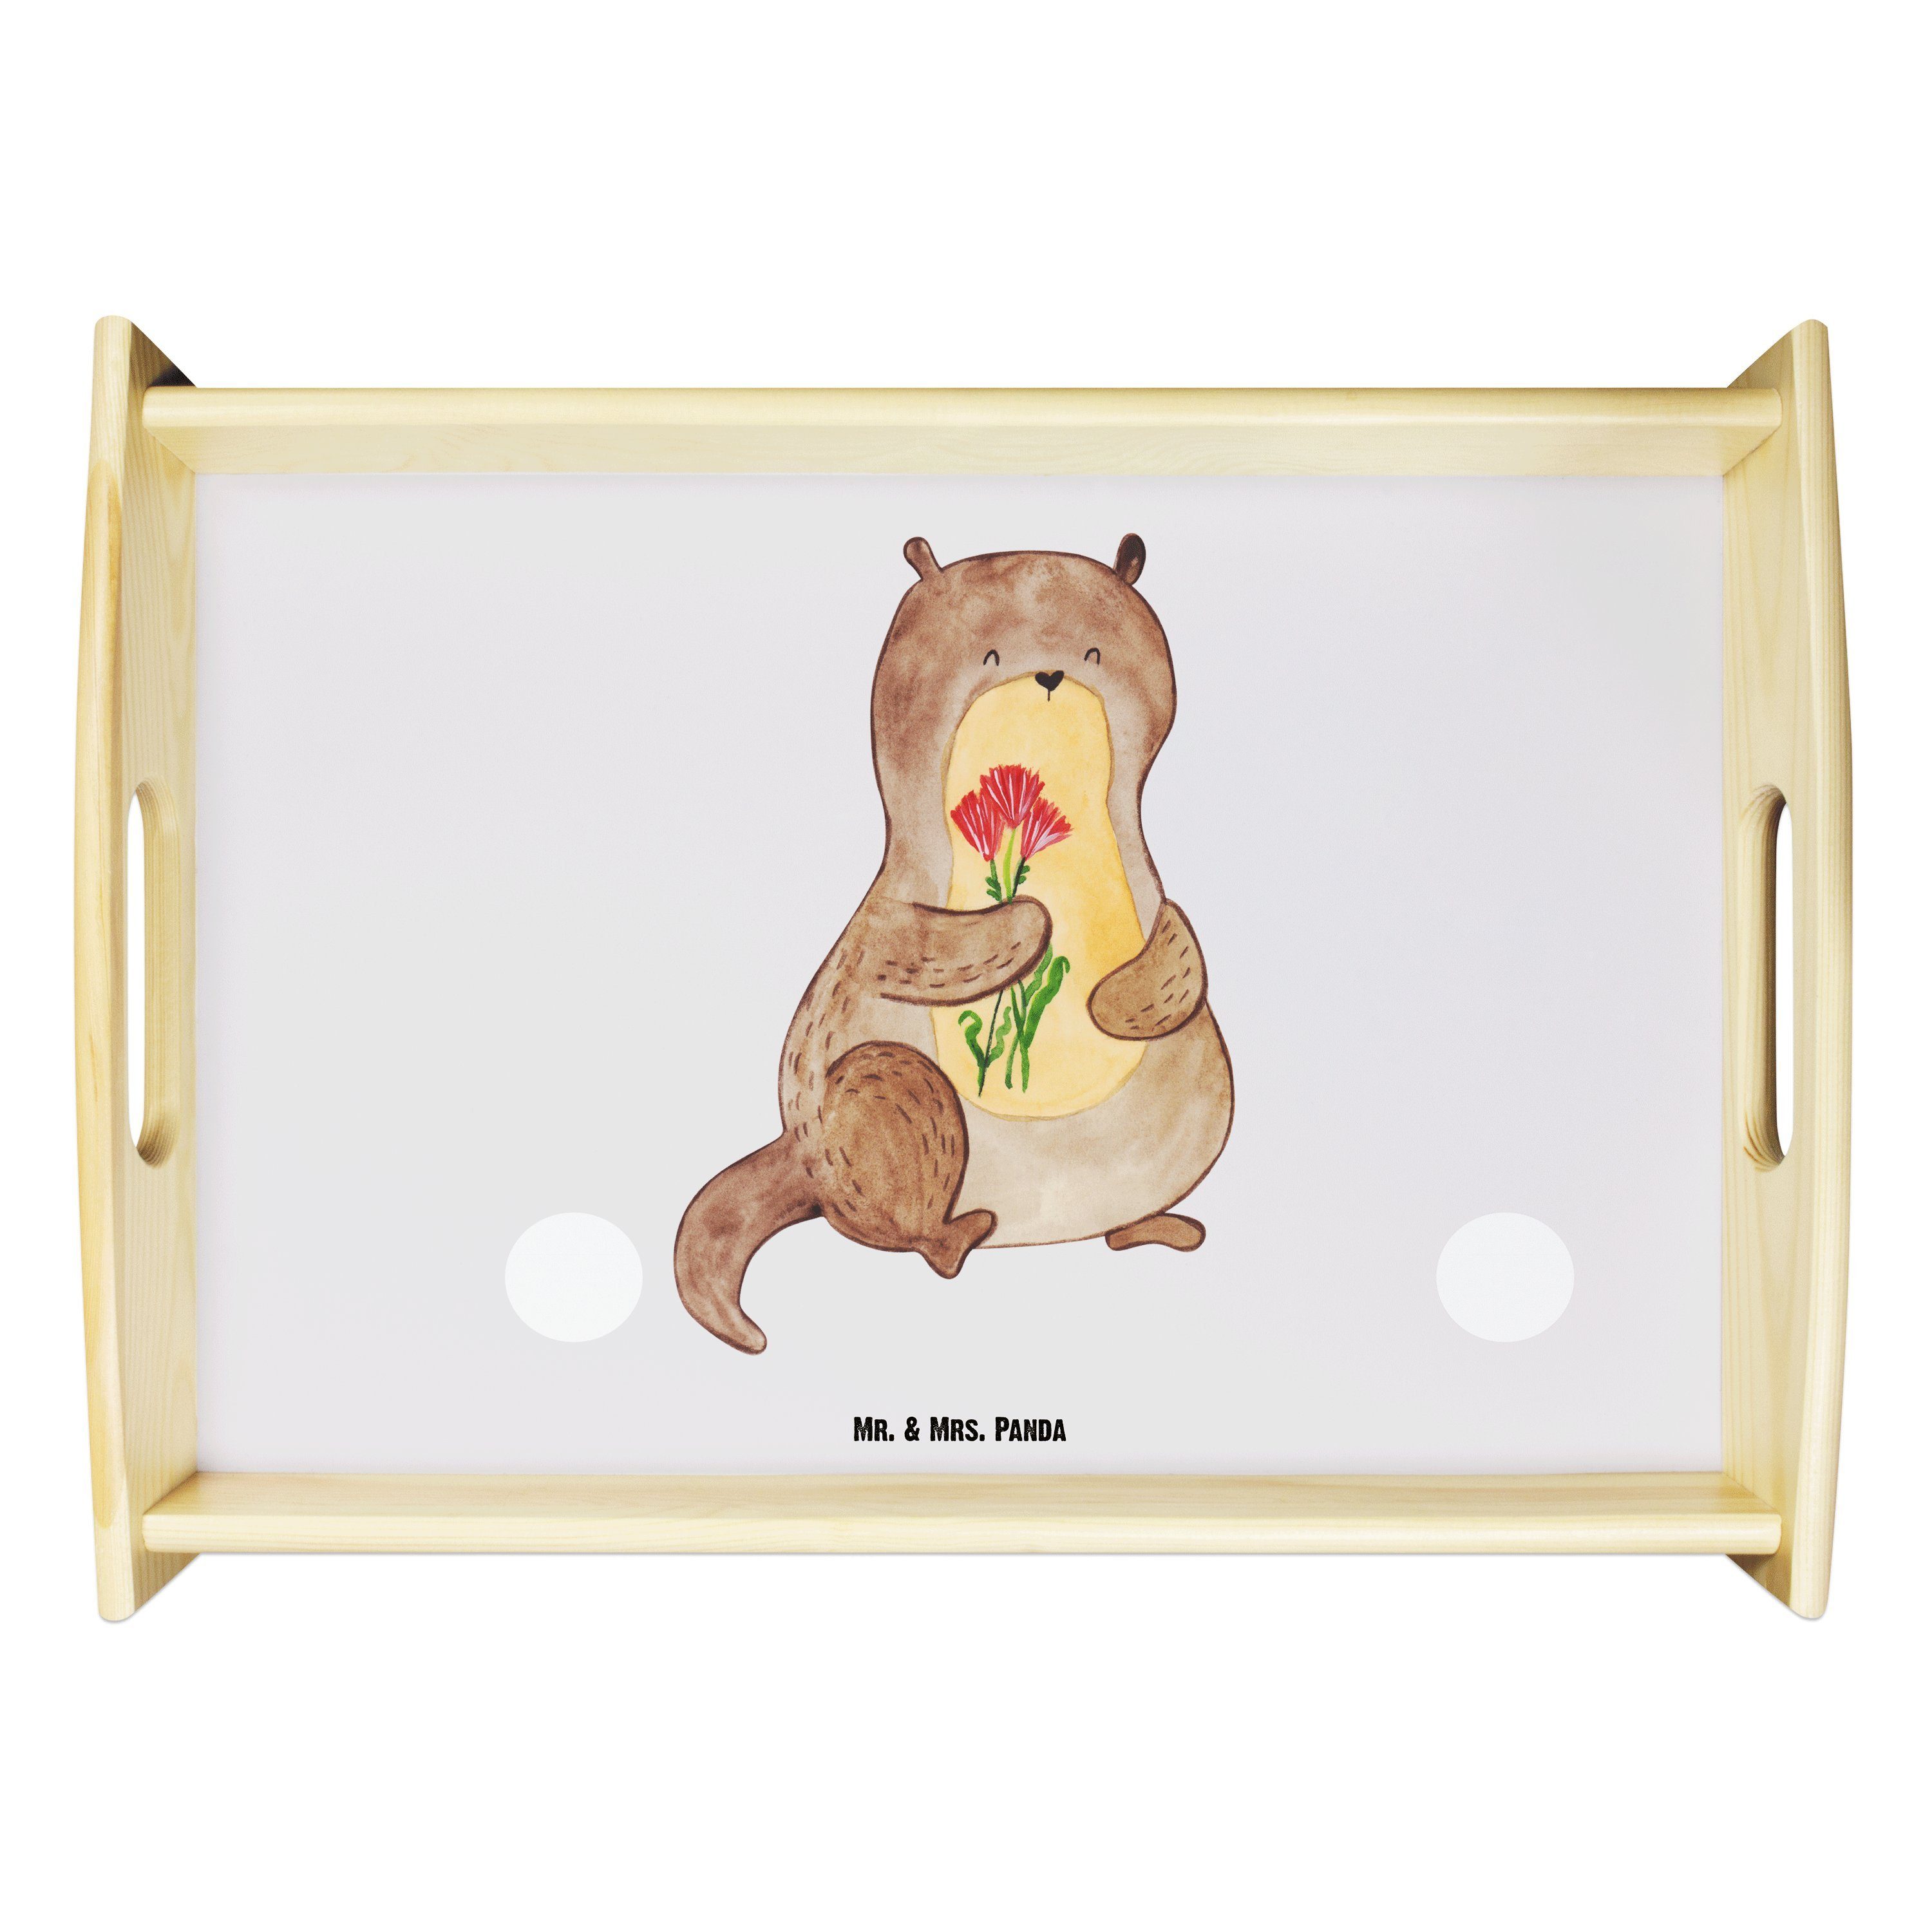 Mr. & Mrs. Panda Tablett Otter Blumenstrauß - Grau Pastell - Geschenk, Seeotter, Otter Seeotte, Echtholz lasiert, (1-tlg)